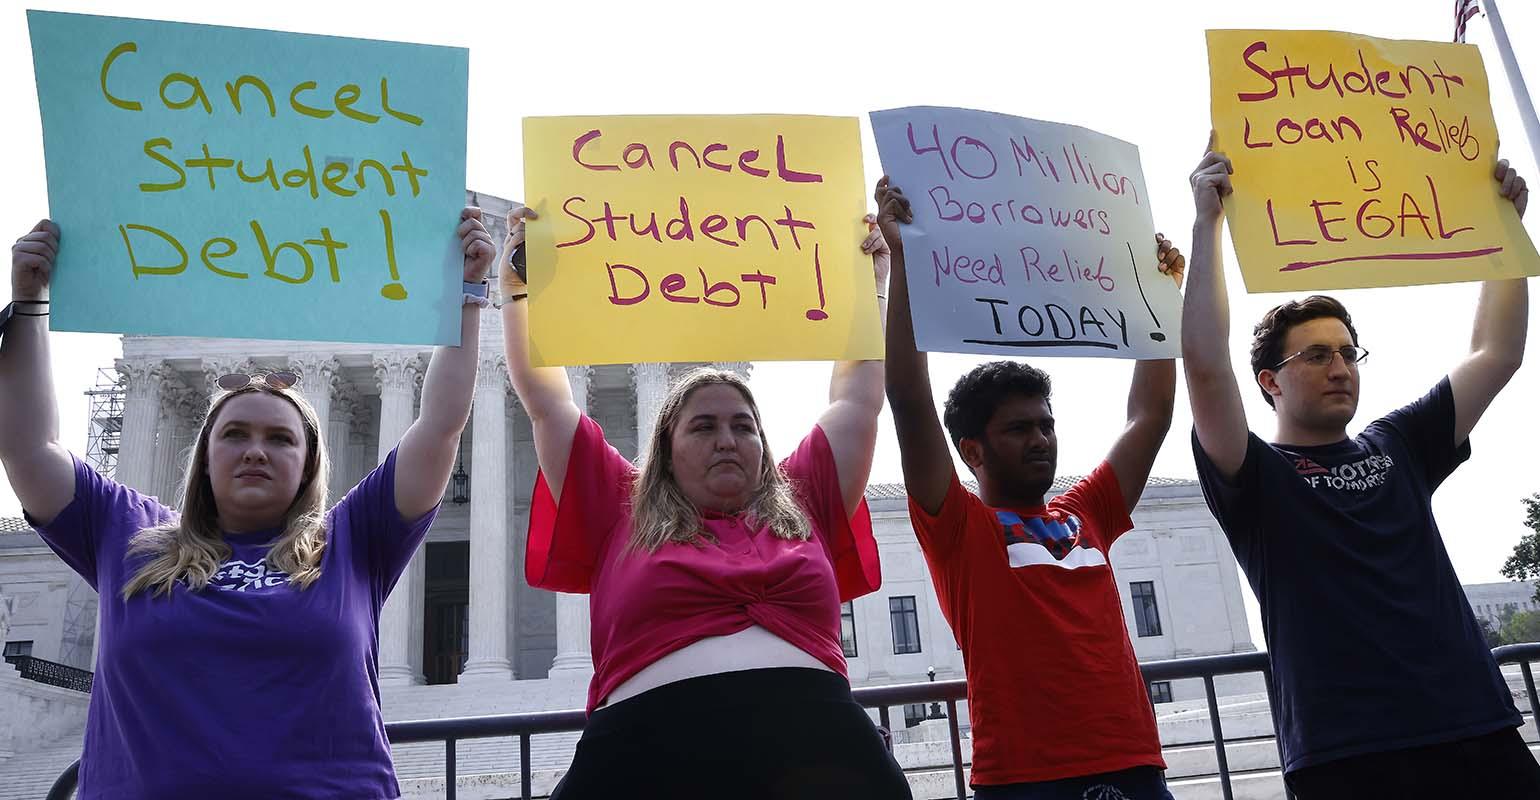 cancel-student-debt-signs.jpg